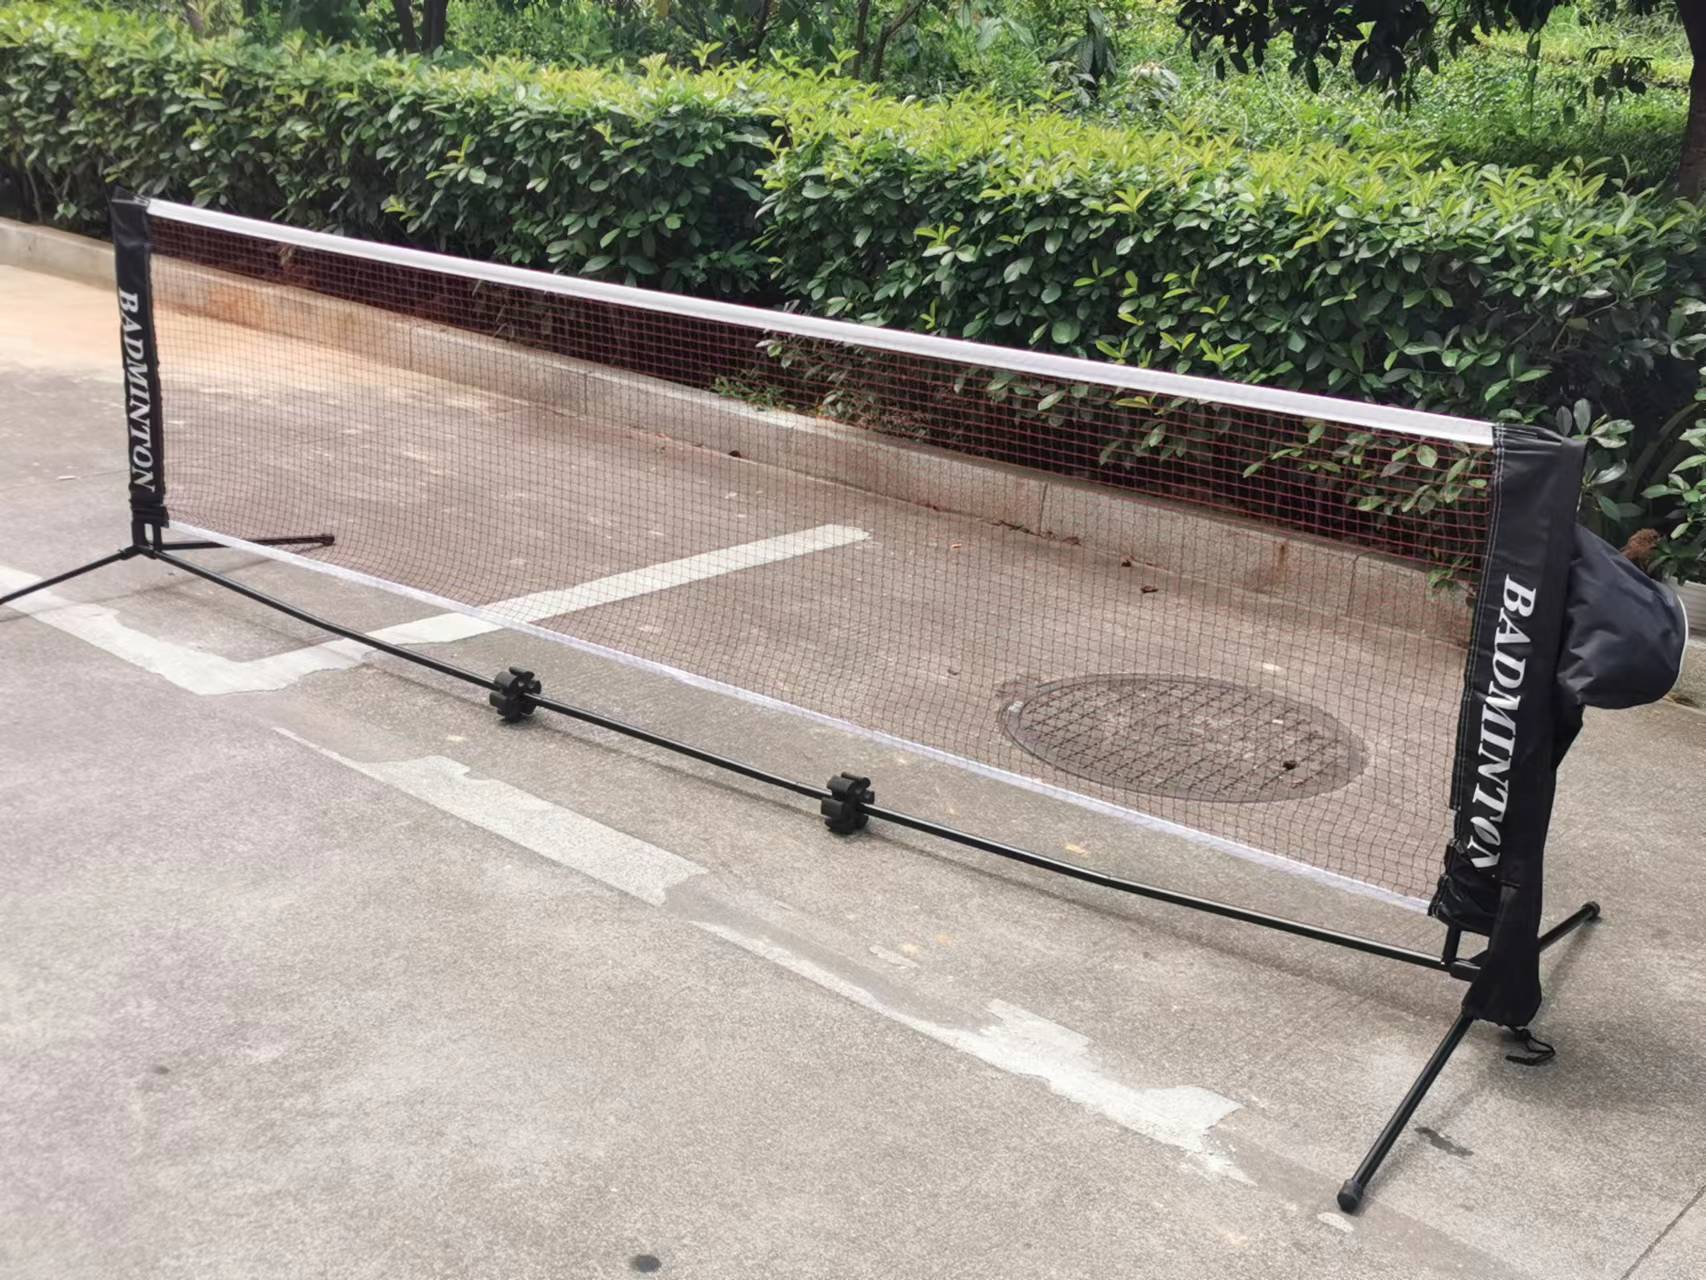 Model portable Parenting badminton Grid outdoors Sure move fold Storage badminton Net post Hanging